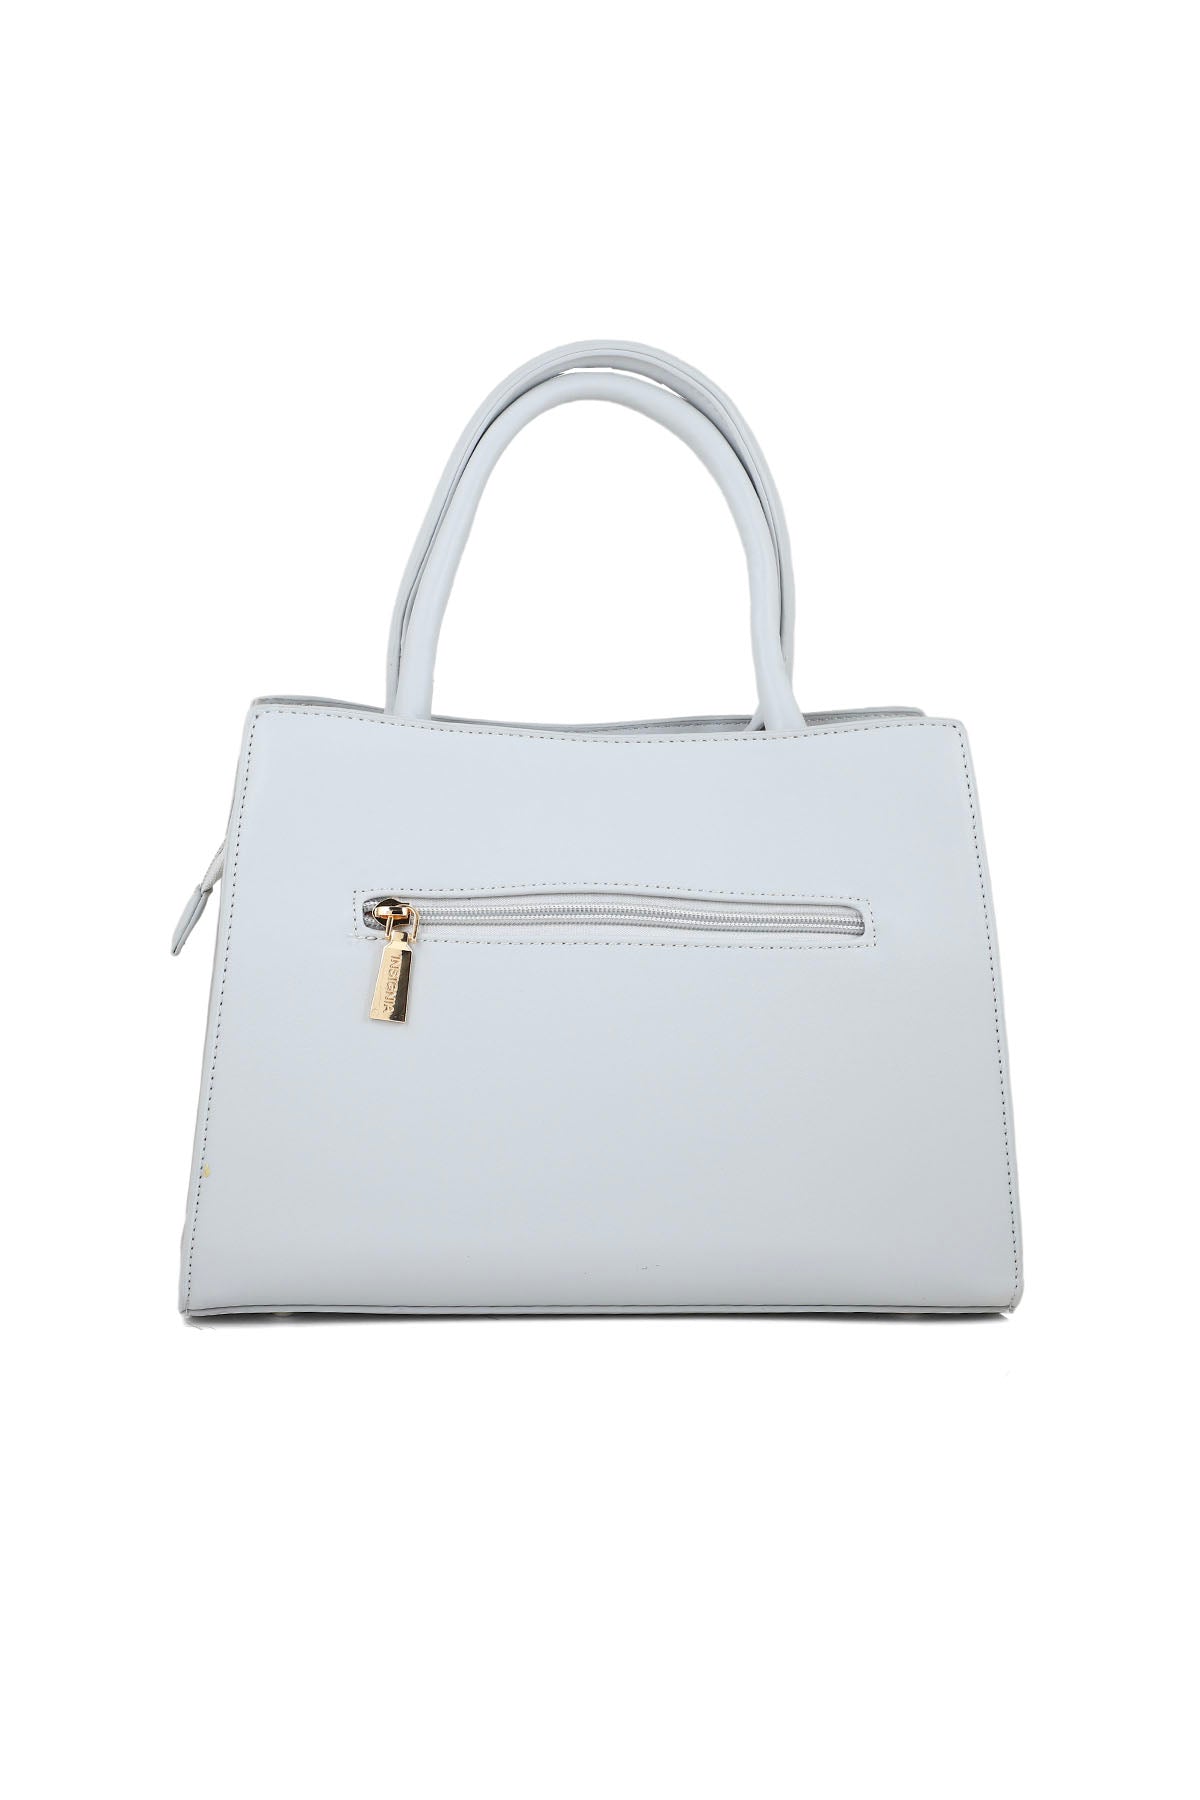 Top Handle Hand Bags B15132-Grey